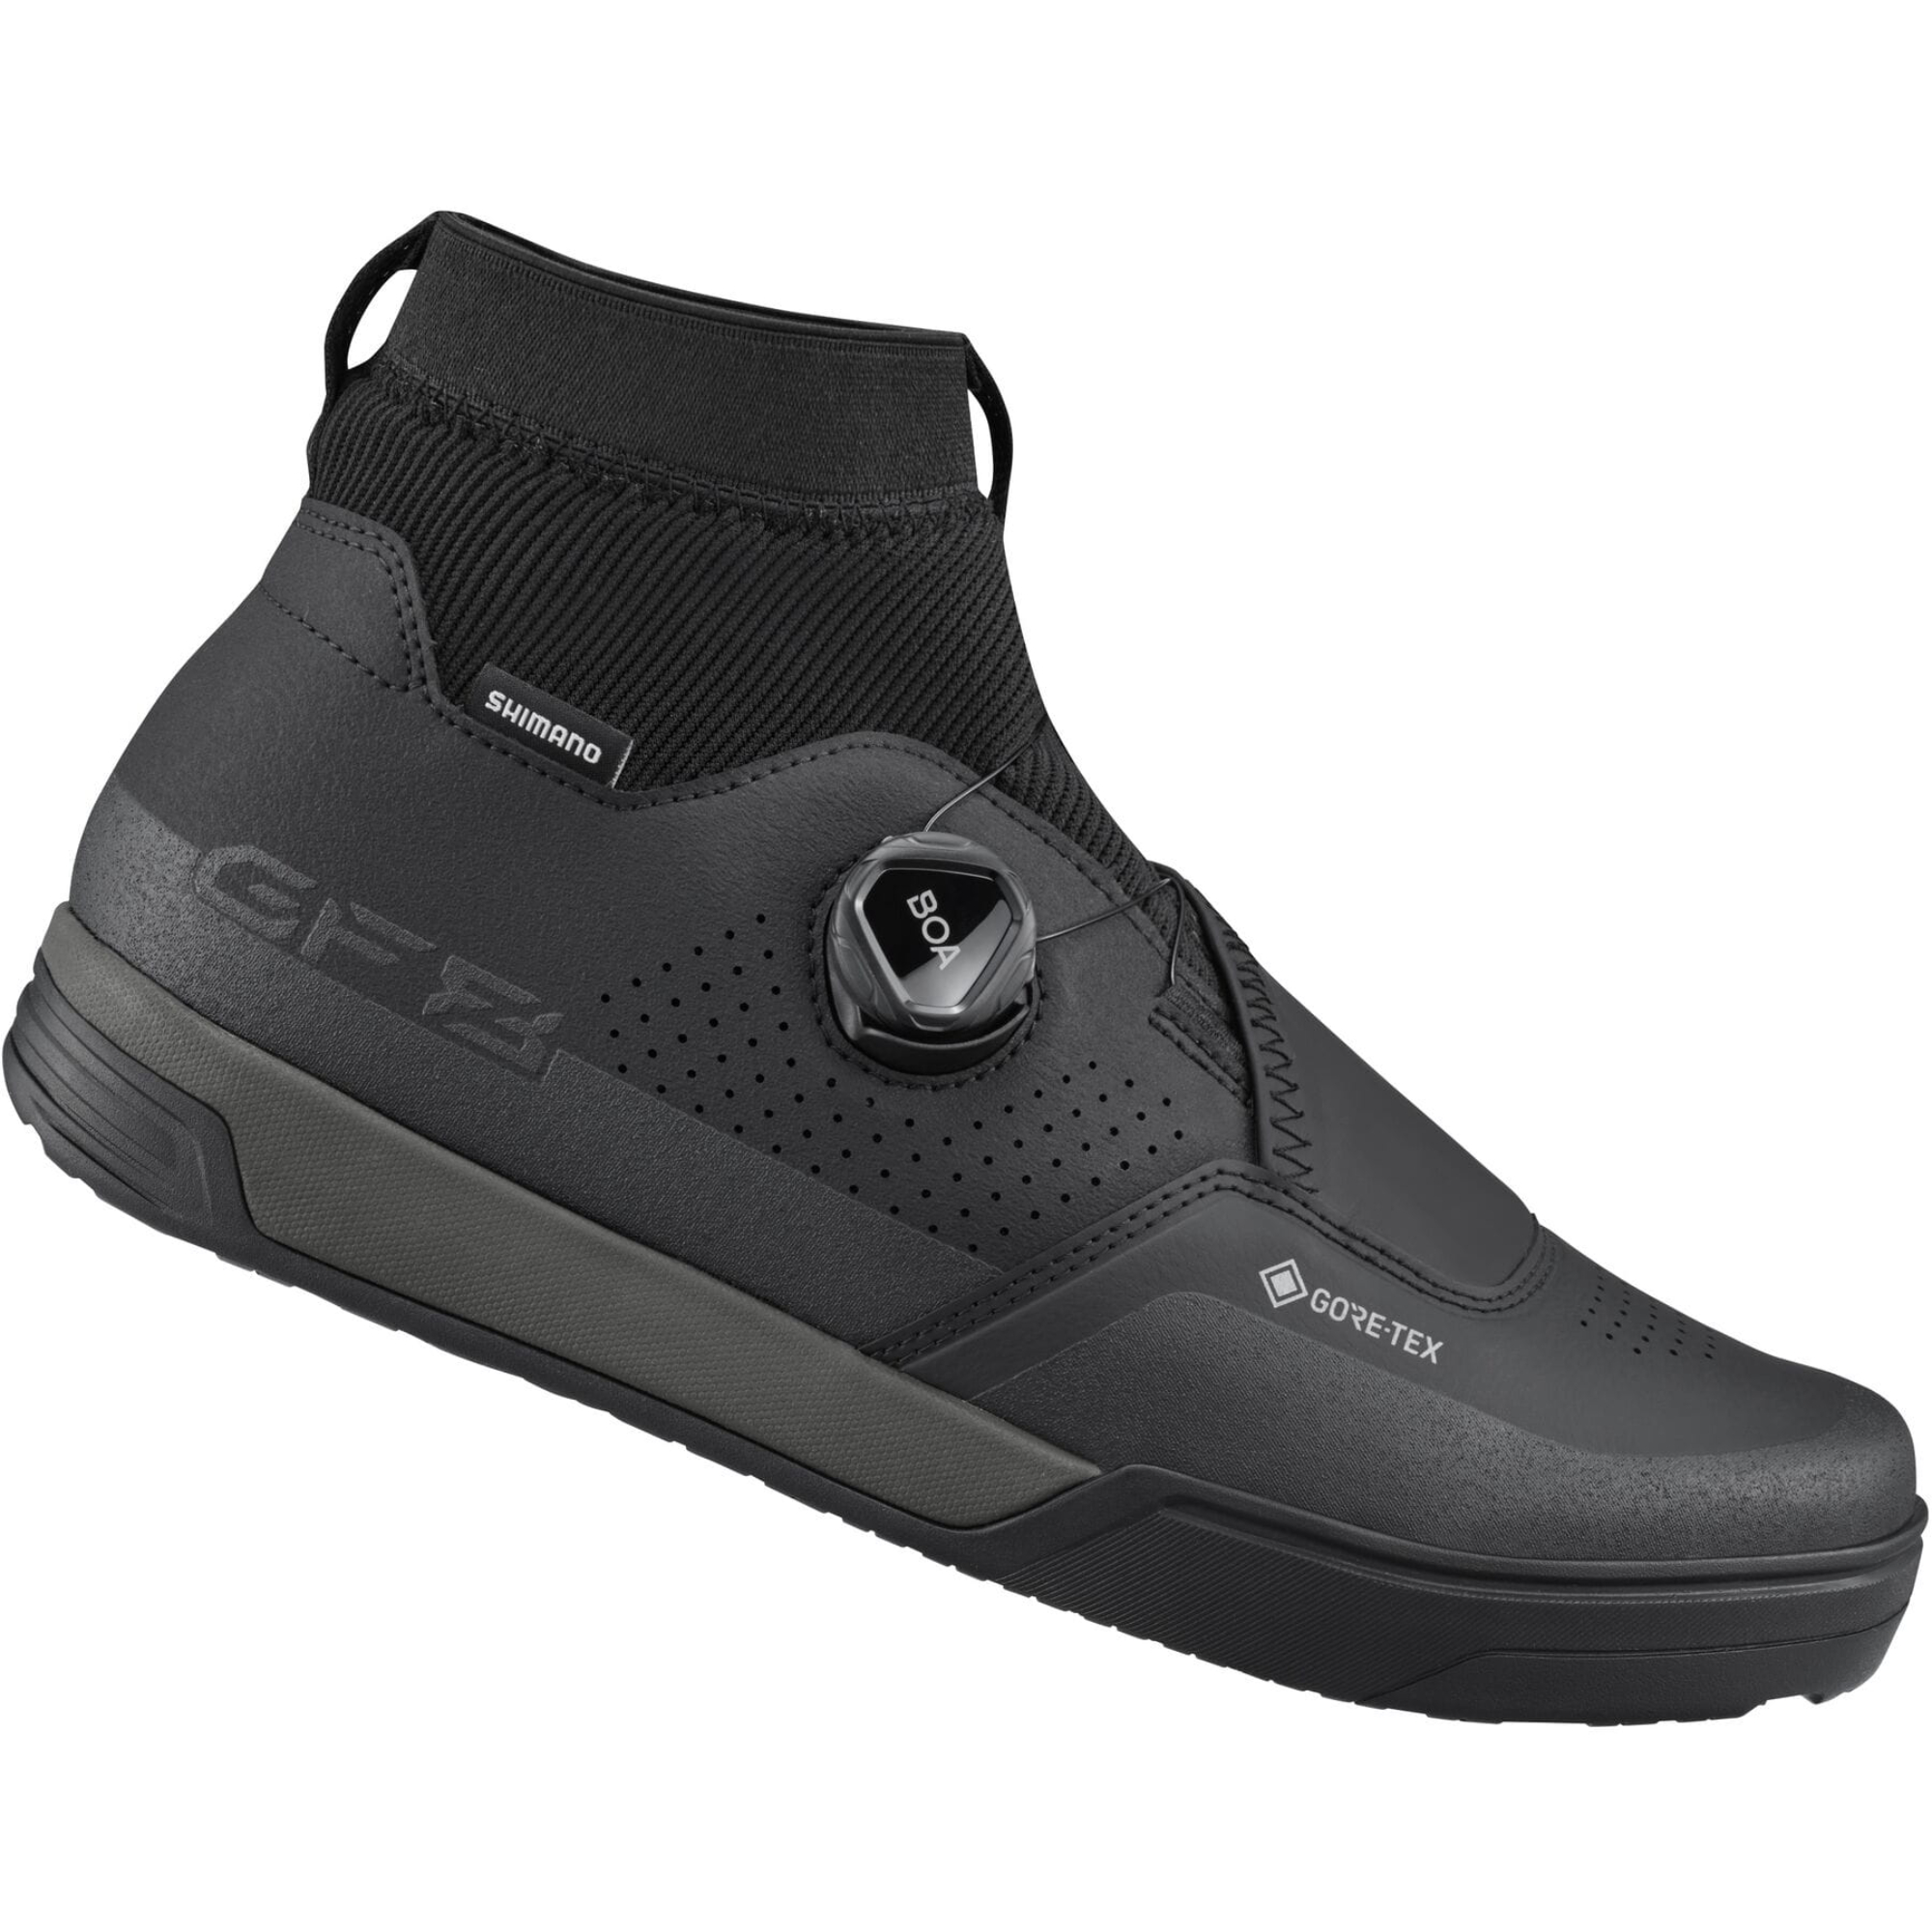 Shimano GF8 (GF800) Gore-Tex MTB Shoes - Waterproof / BOA Fit 